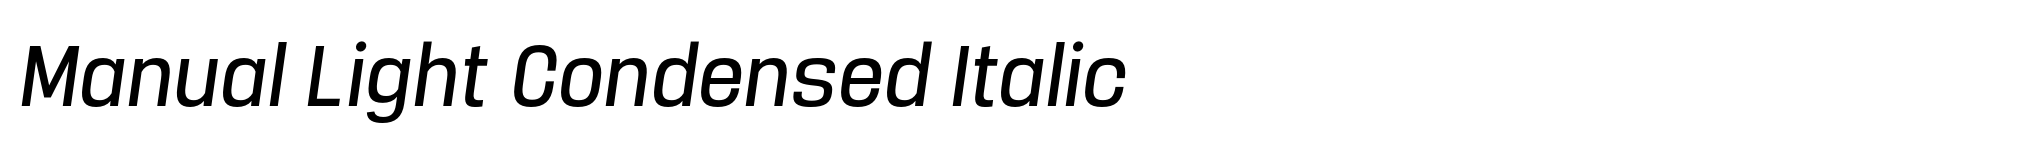 Manual Light Condensed Italic image